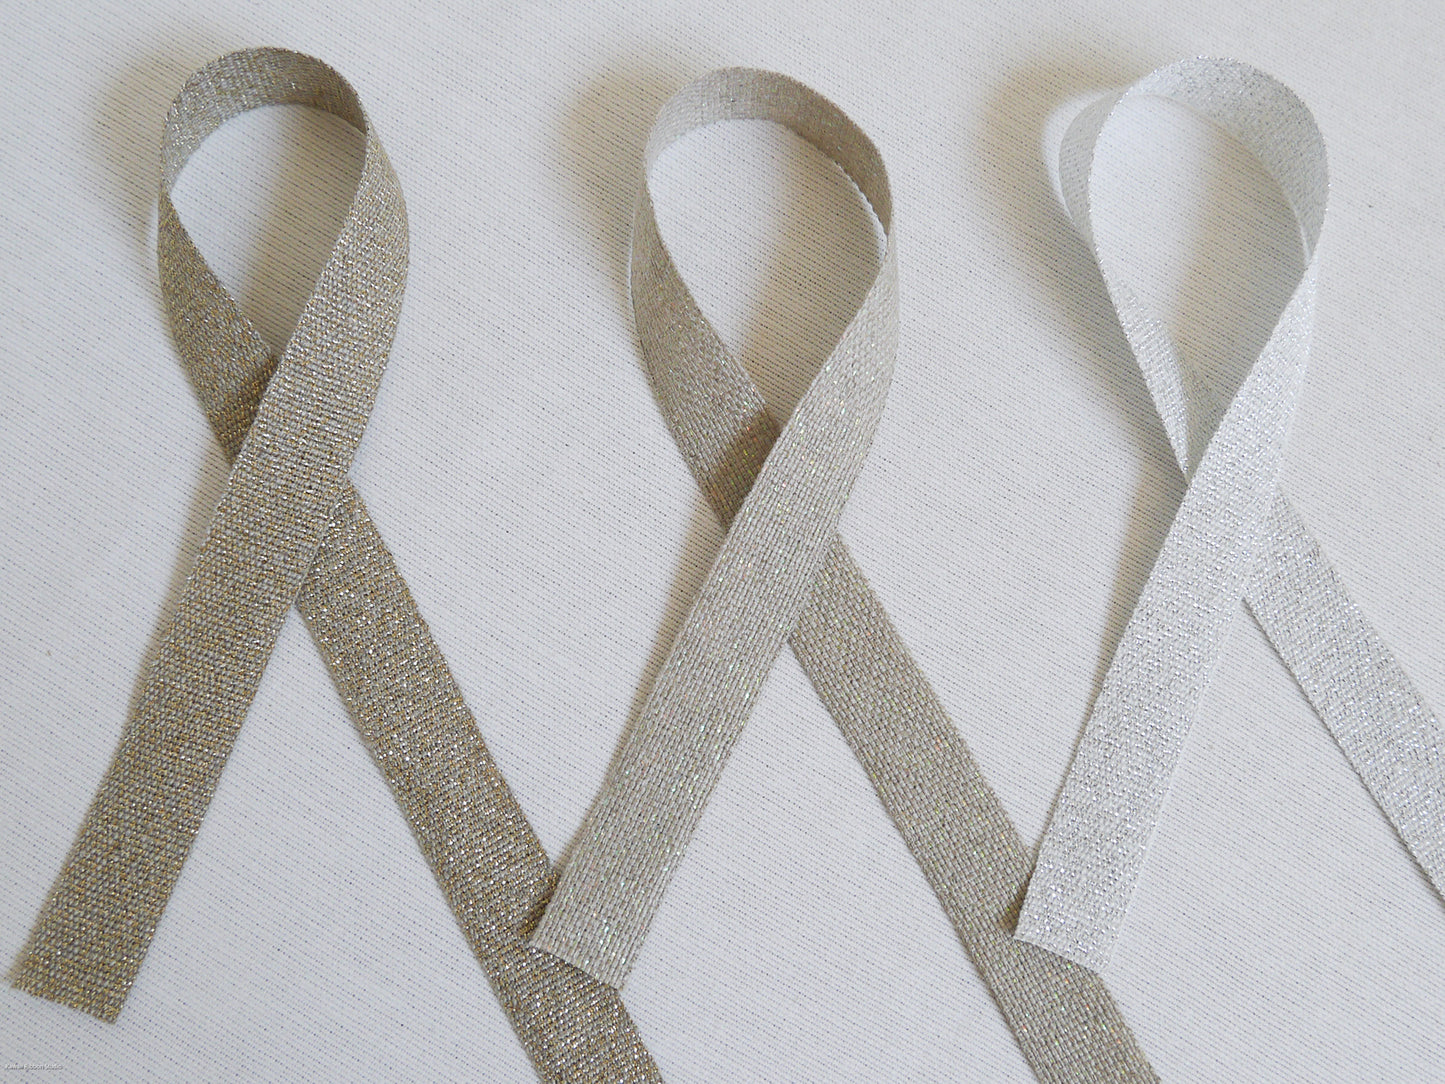 Metallic & washed linen mixed ribbon/ tape